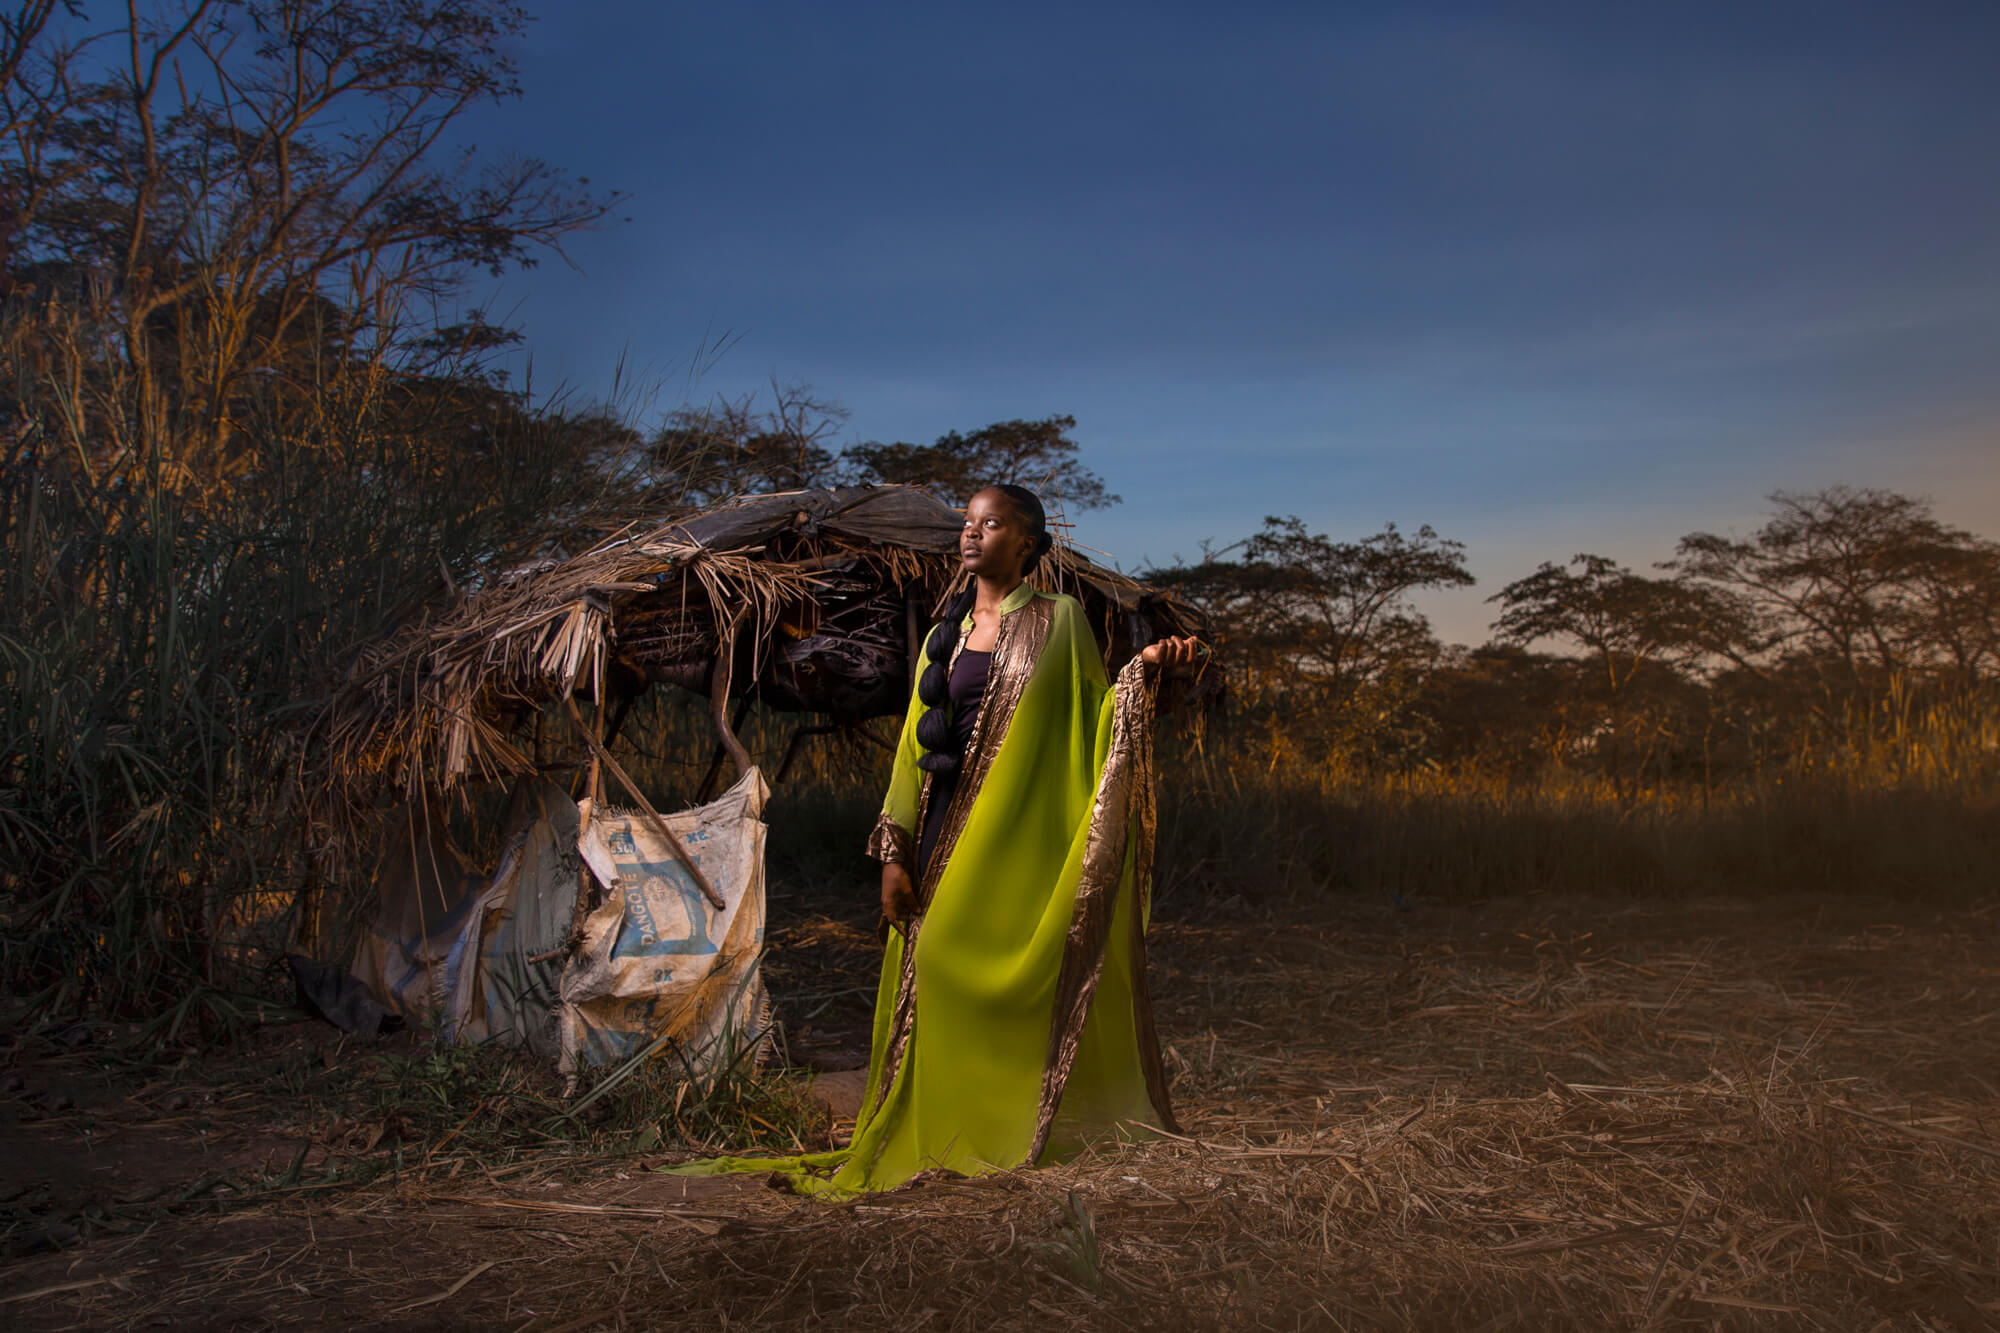 Photoshoot in the bush | Zambian photographer